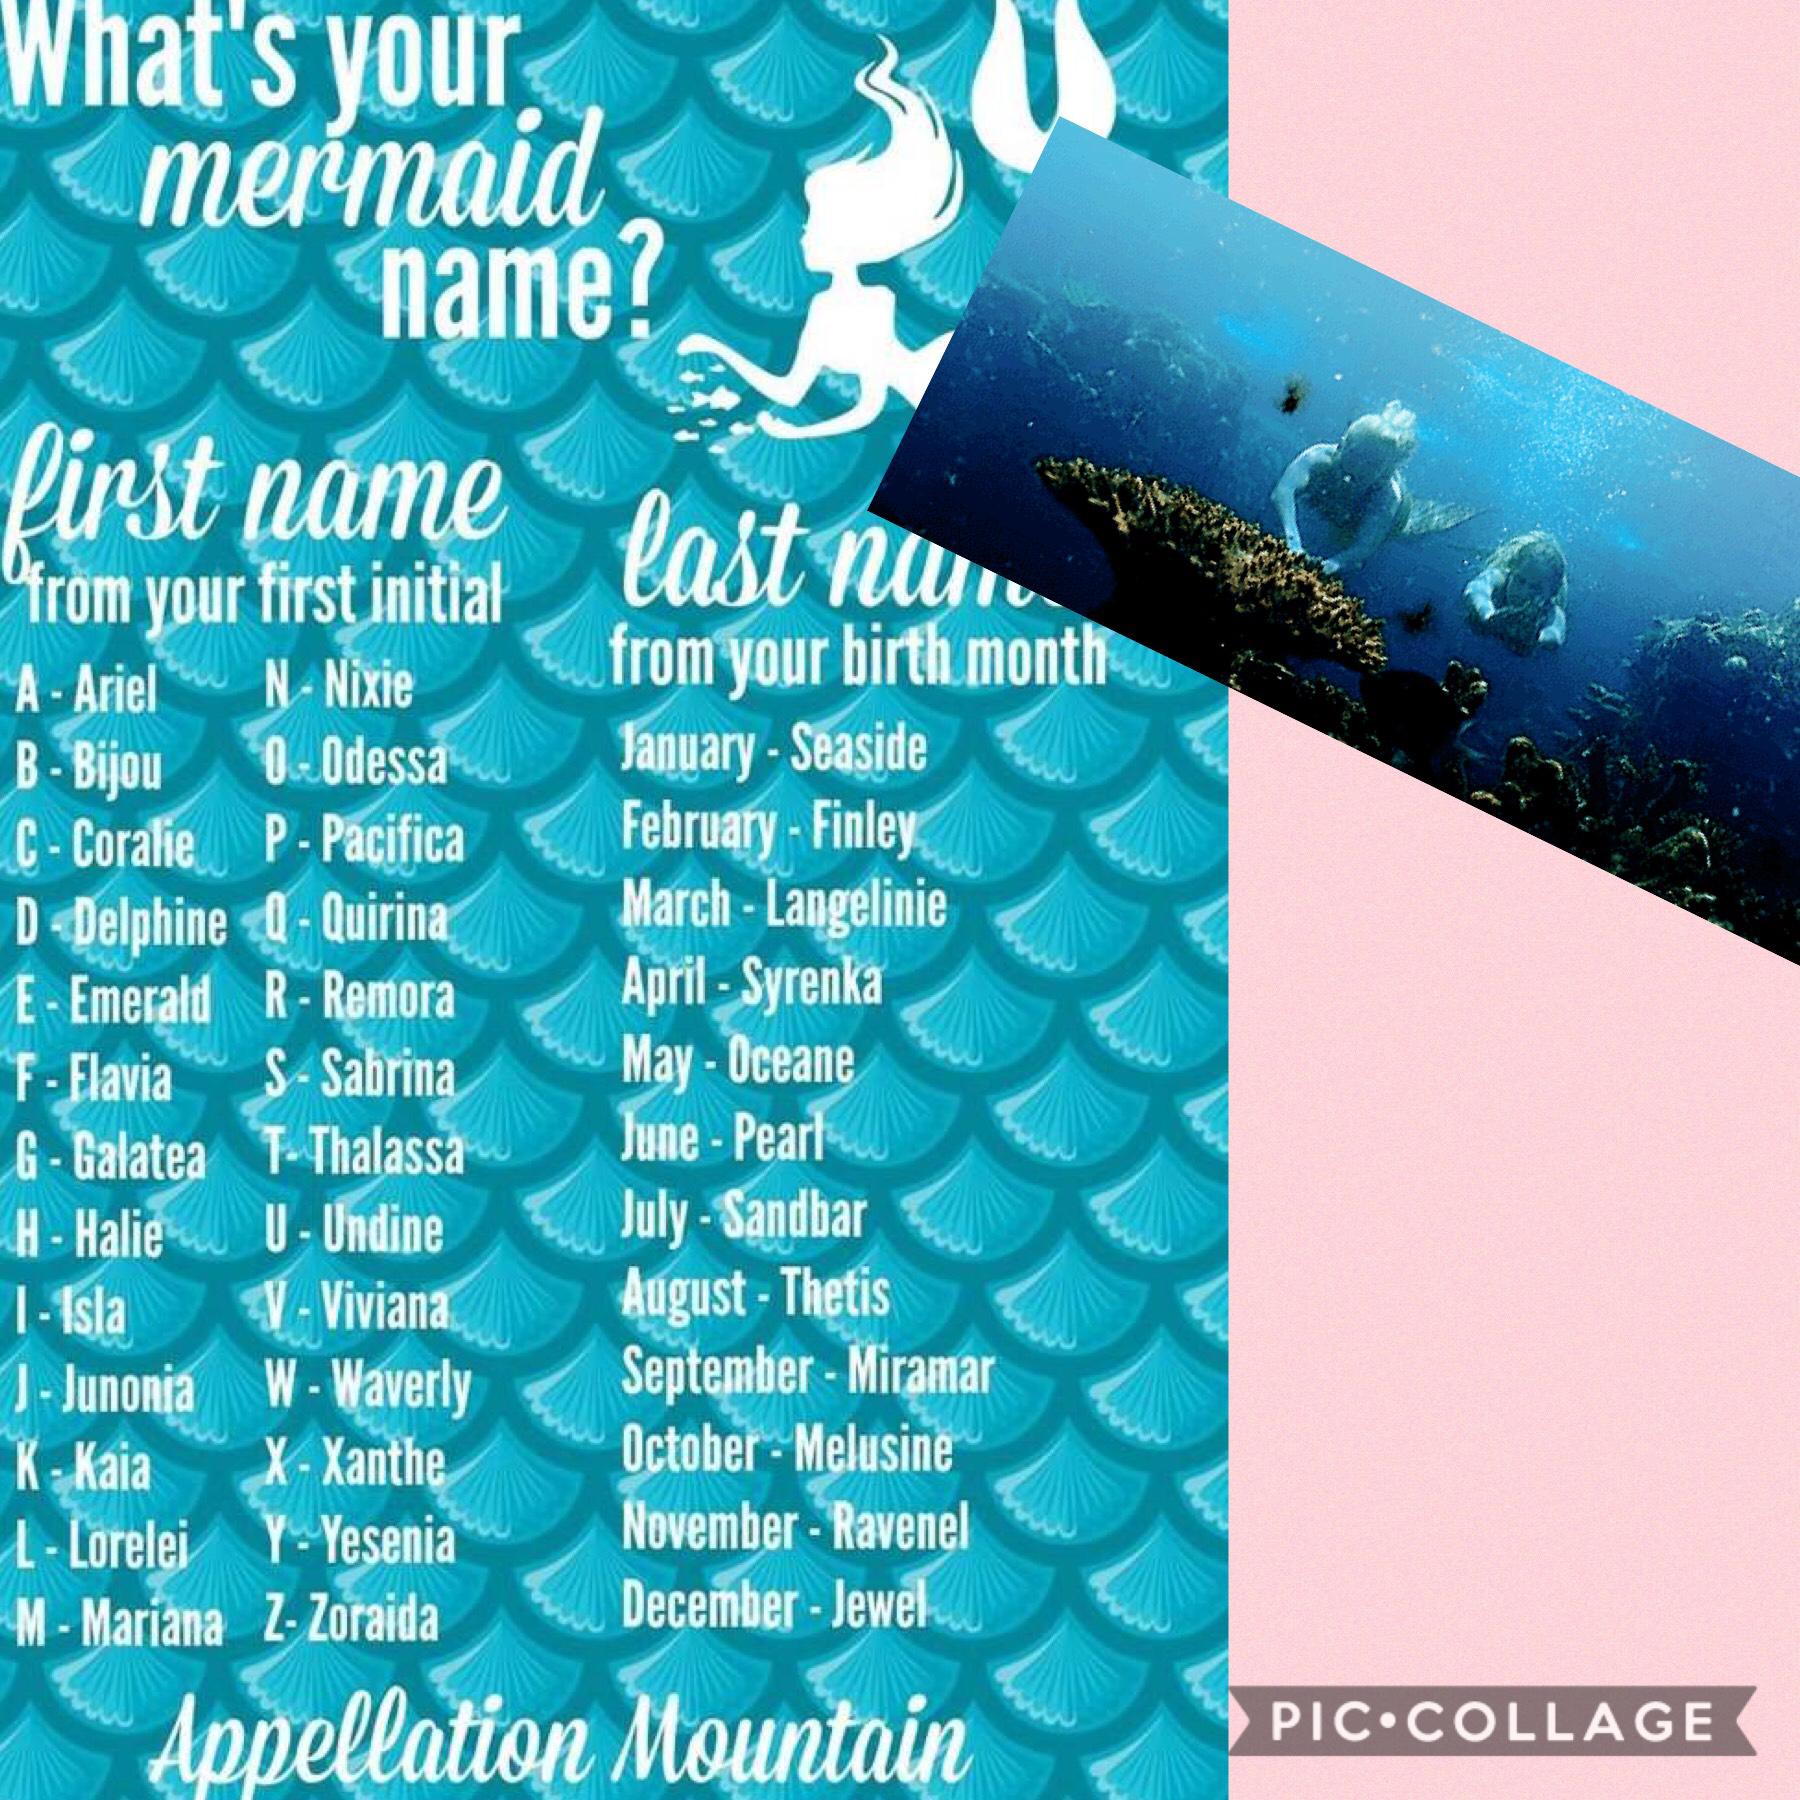 Mermaid name